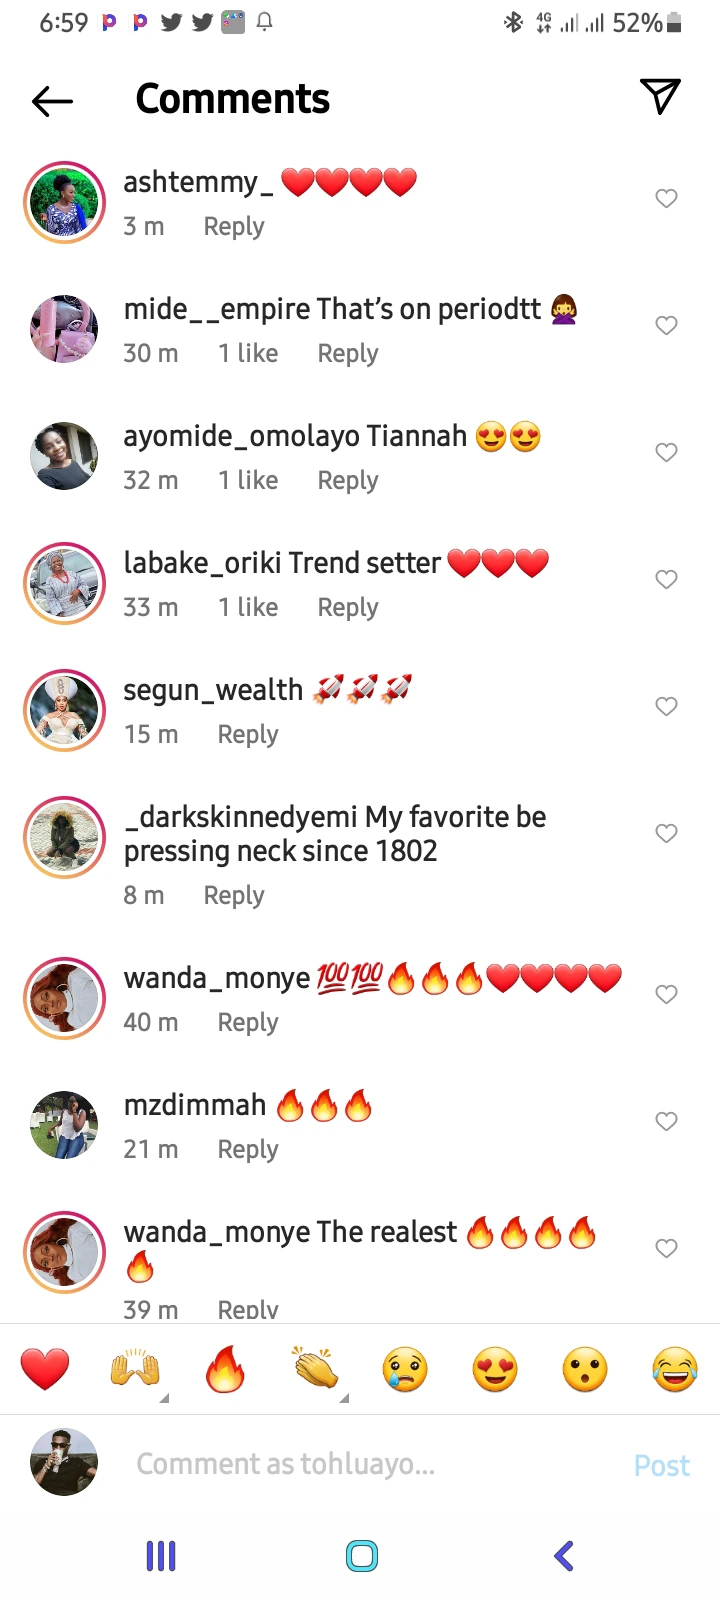 instagram - Reactions As Celebrity Stylist, Toyin Lawani Shares Stunning Photos On Instagram (PHOTOS) 39674fd89c144b3ea096eb4488f6264a?quality=uhq&format=webp&resize=720